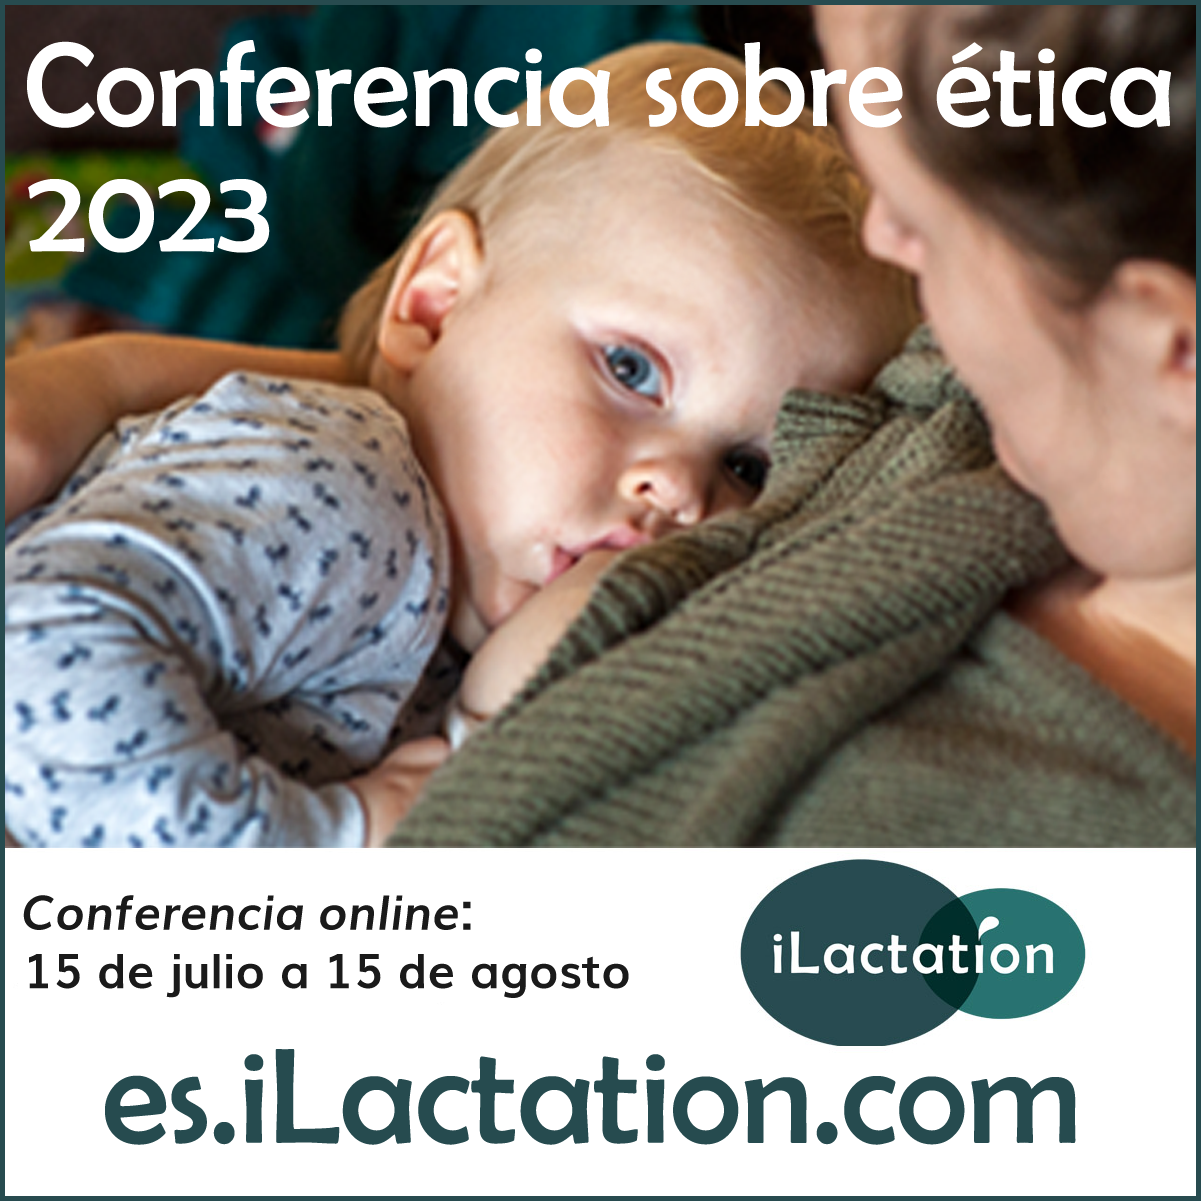 Insta - Conferencia sobre ética 2023